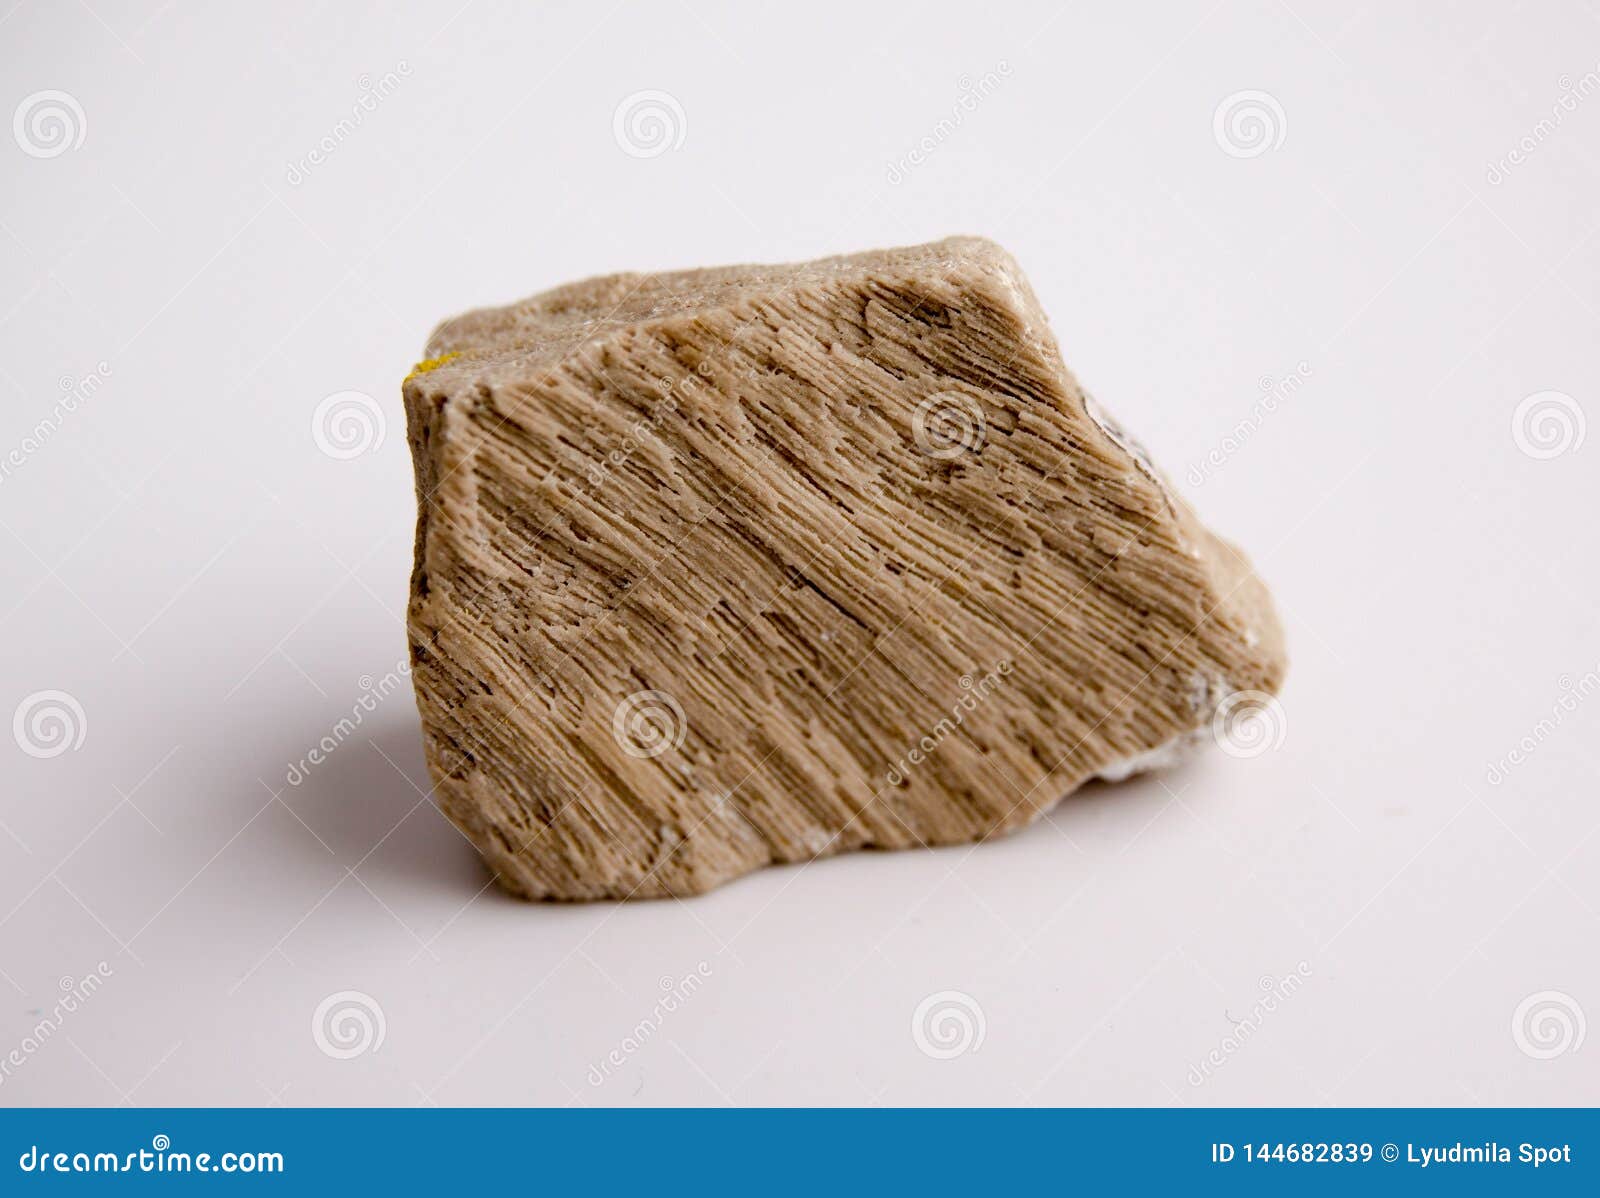 natural specimen of foraminiferal ooze limestone - organogenic sedimentary rock